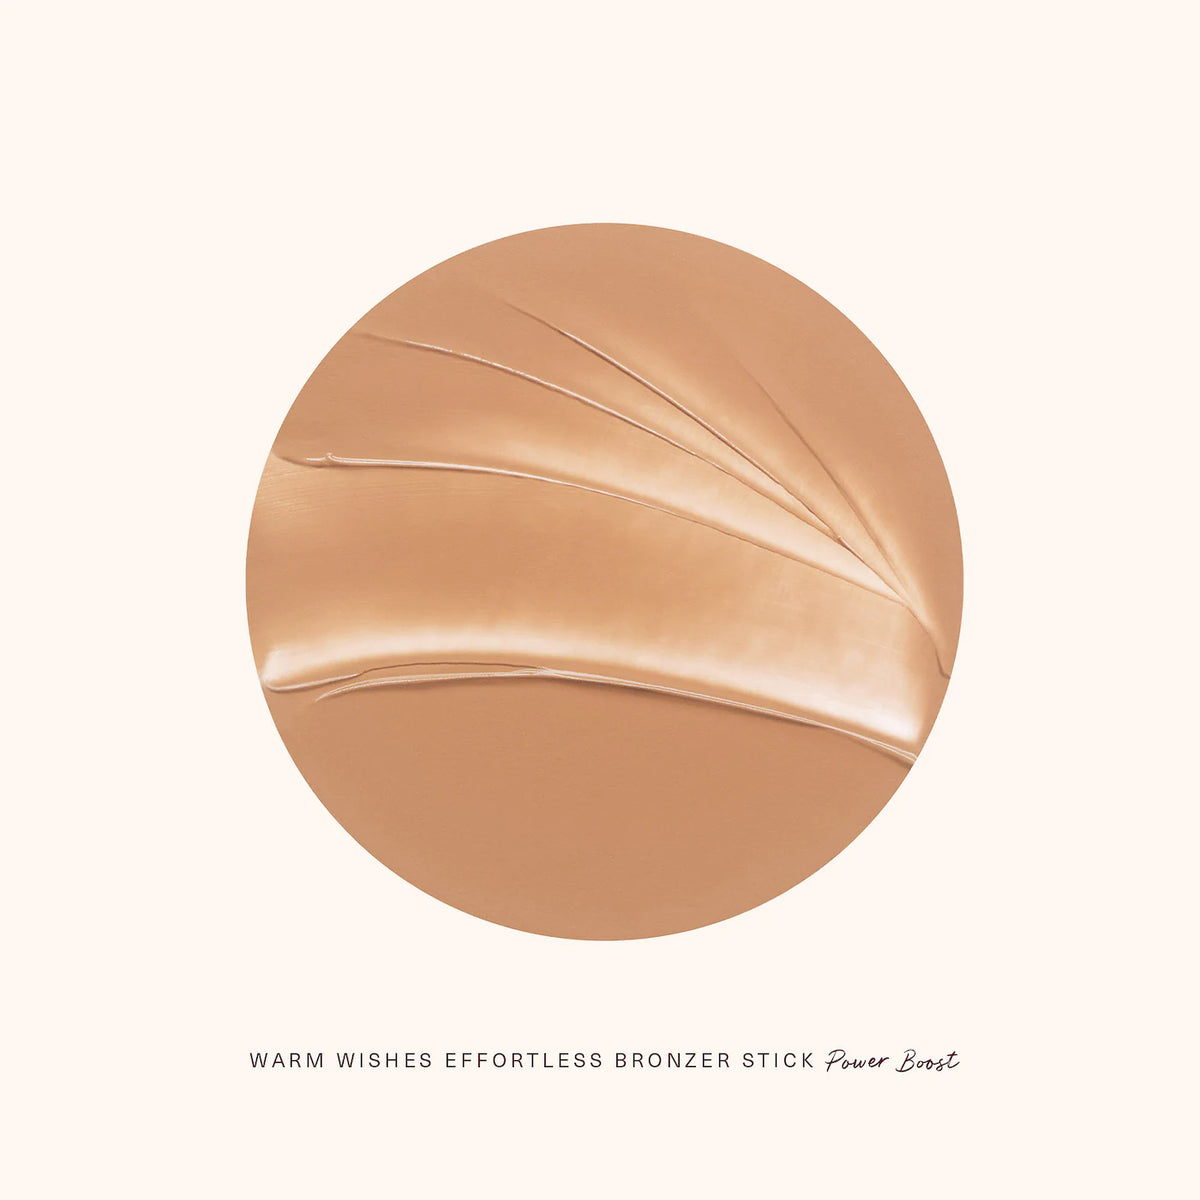 Rare Beauty by Selena Gomez Warm Wishes Effortless Bronzer Sticks  Volare Makeup Power Boost - true tan with neutral undertones  